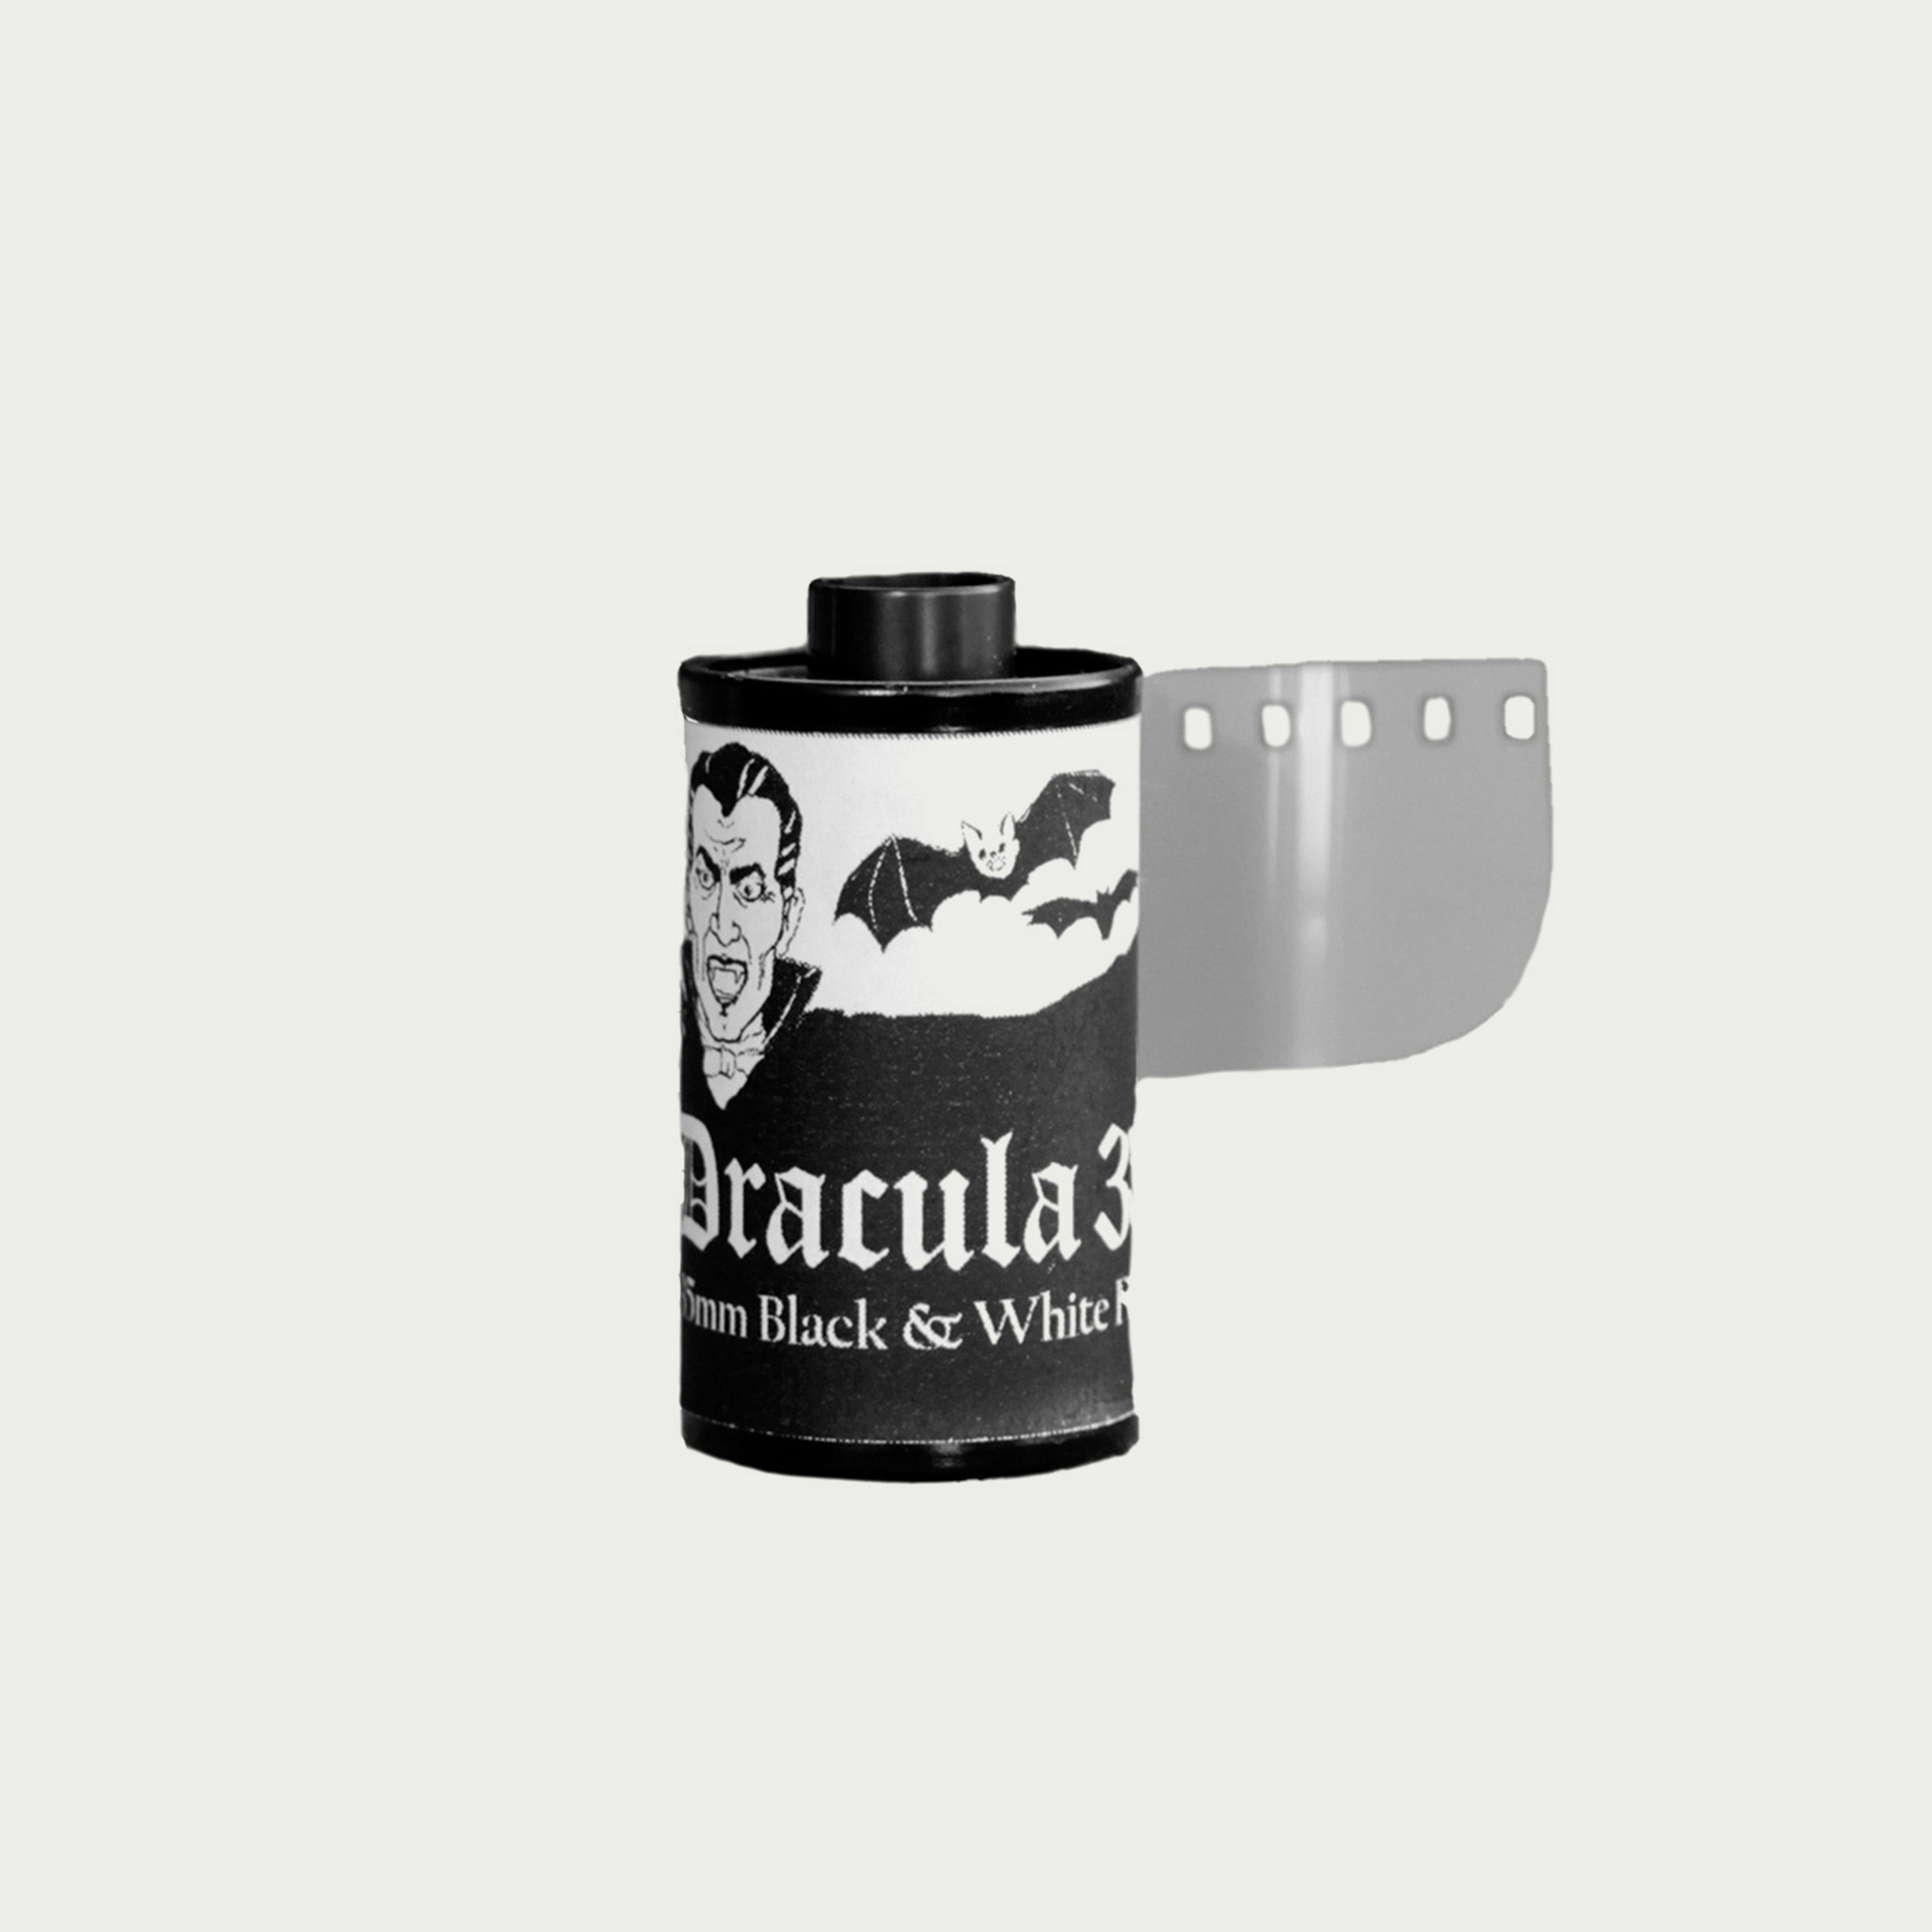 Dracula Panchromatic Black and White Negative - 35mm Film